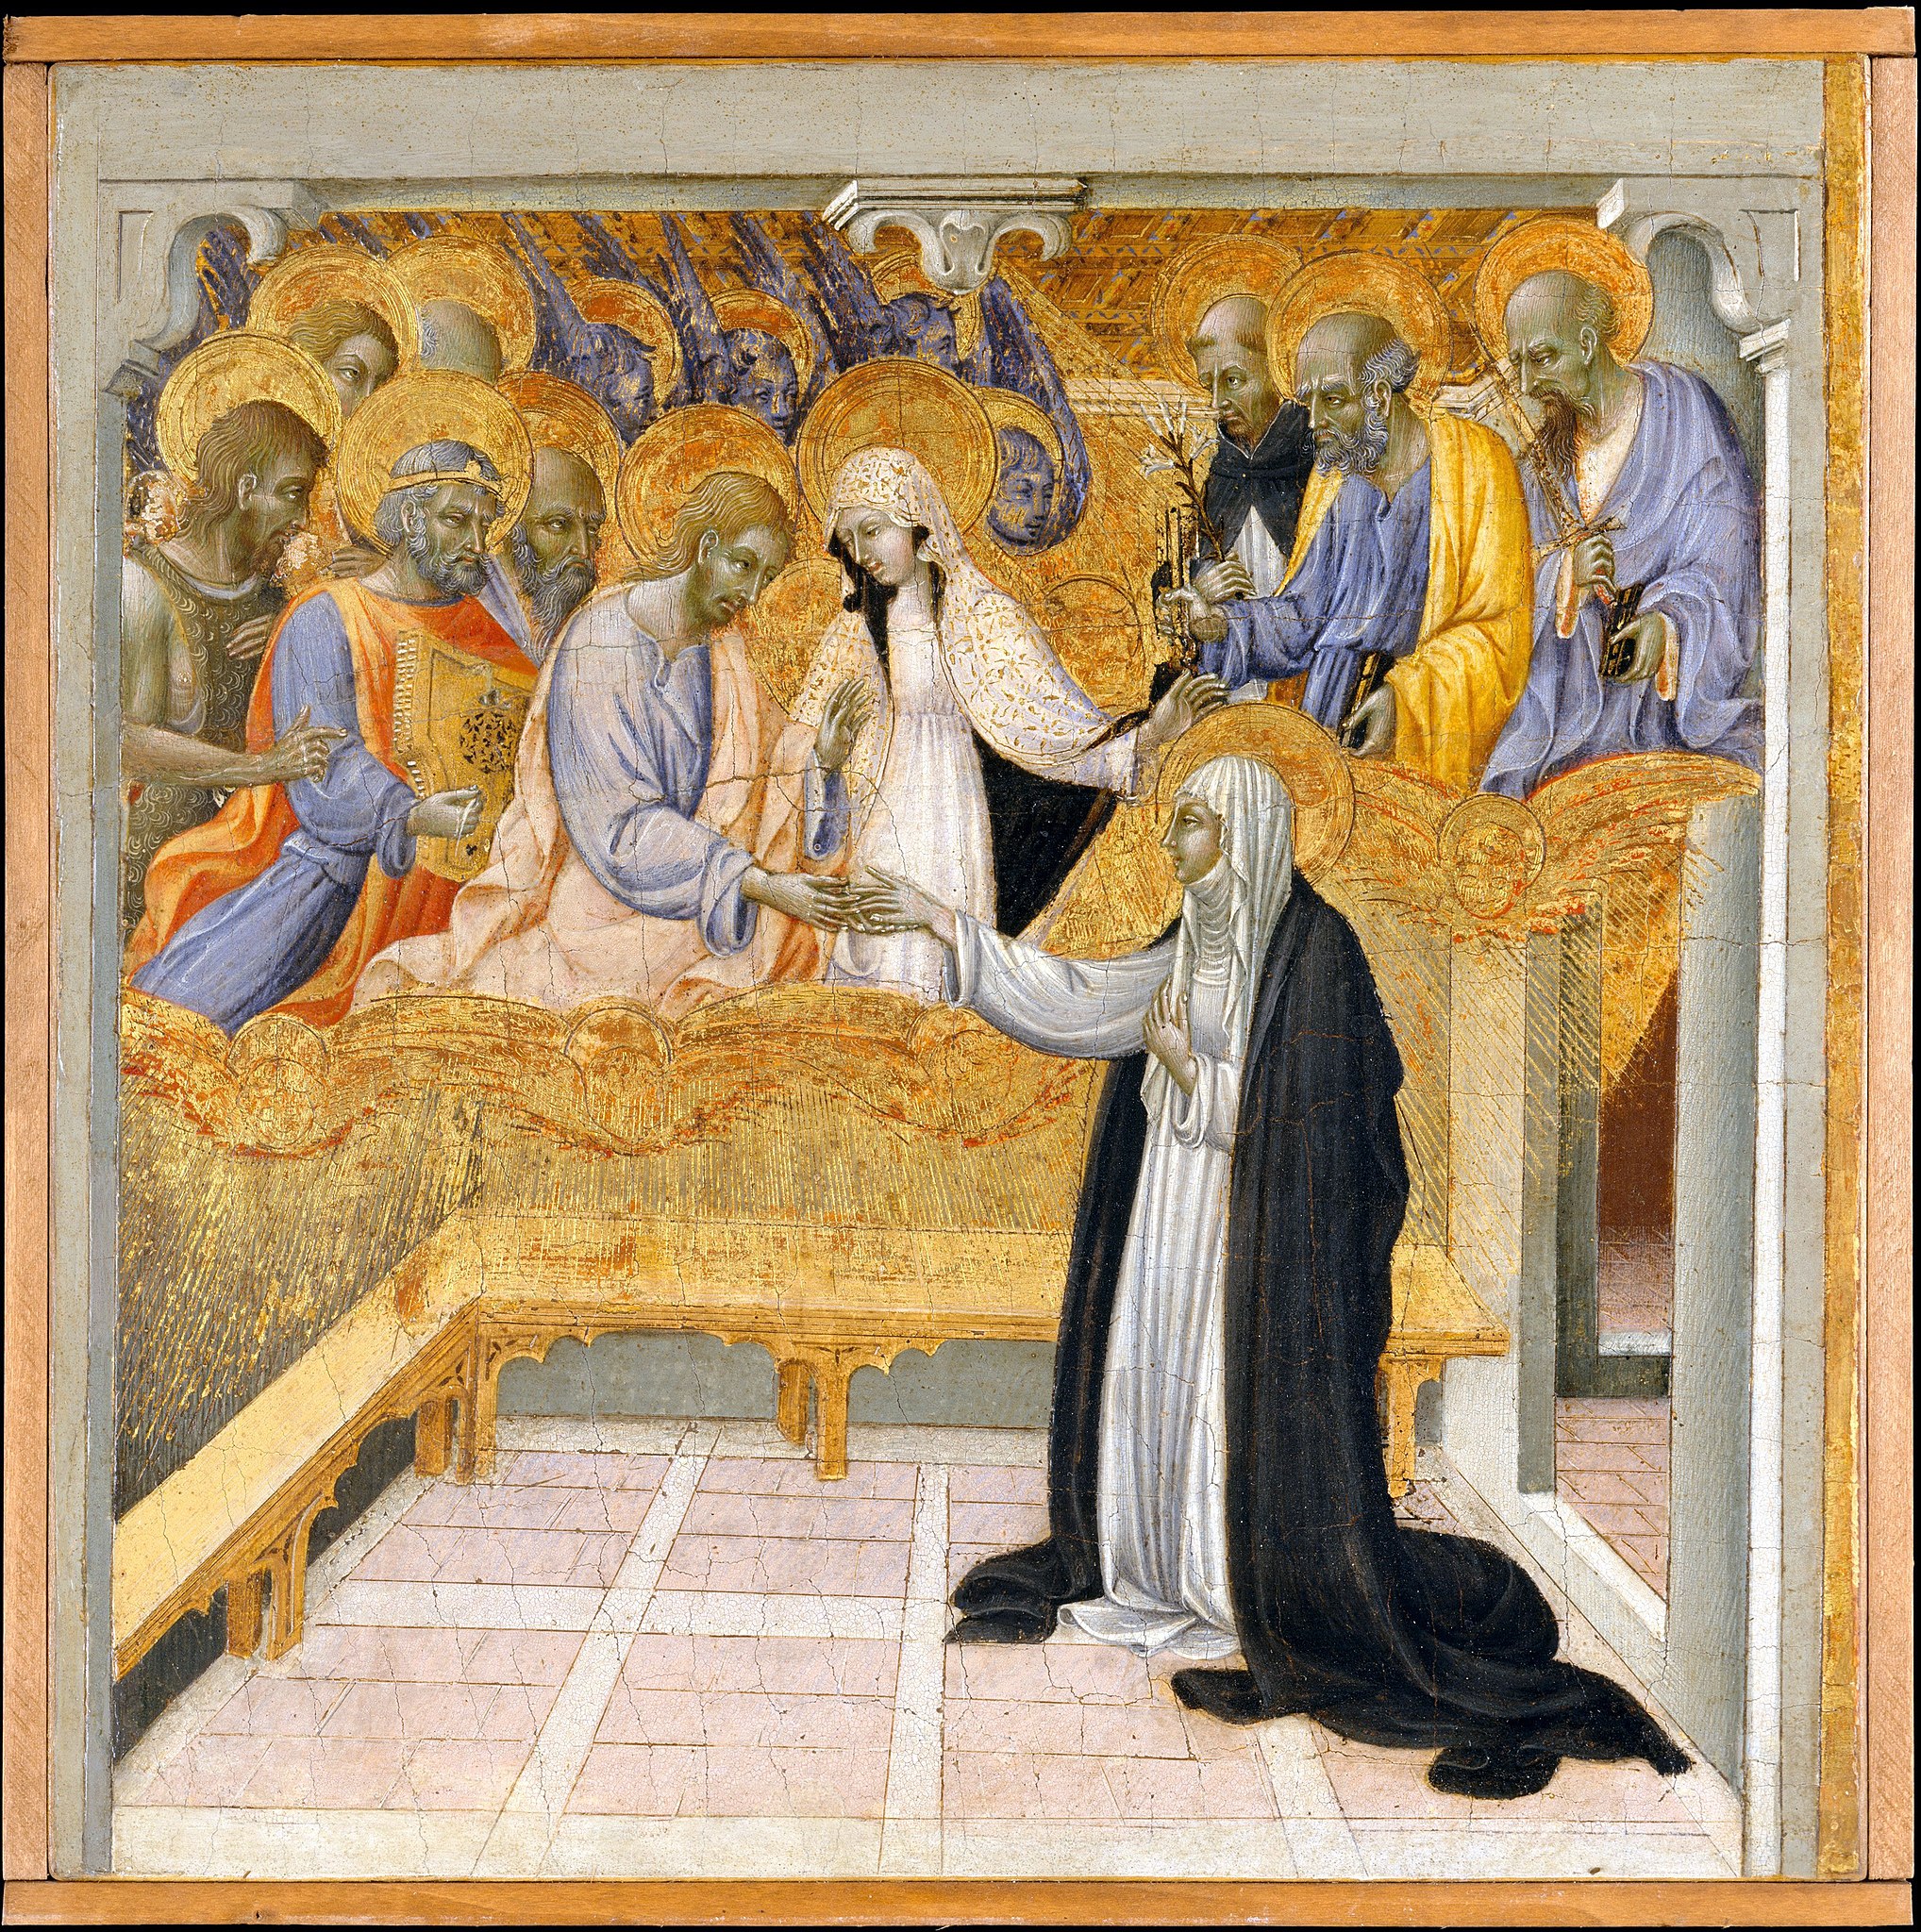 Saint Catherine's marriage to Christ